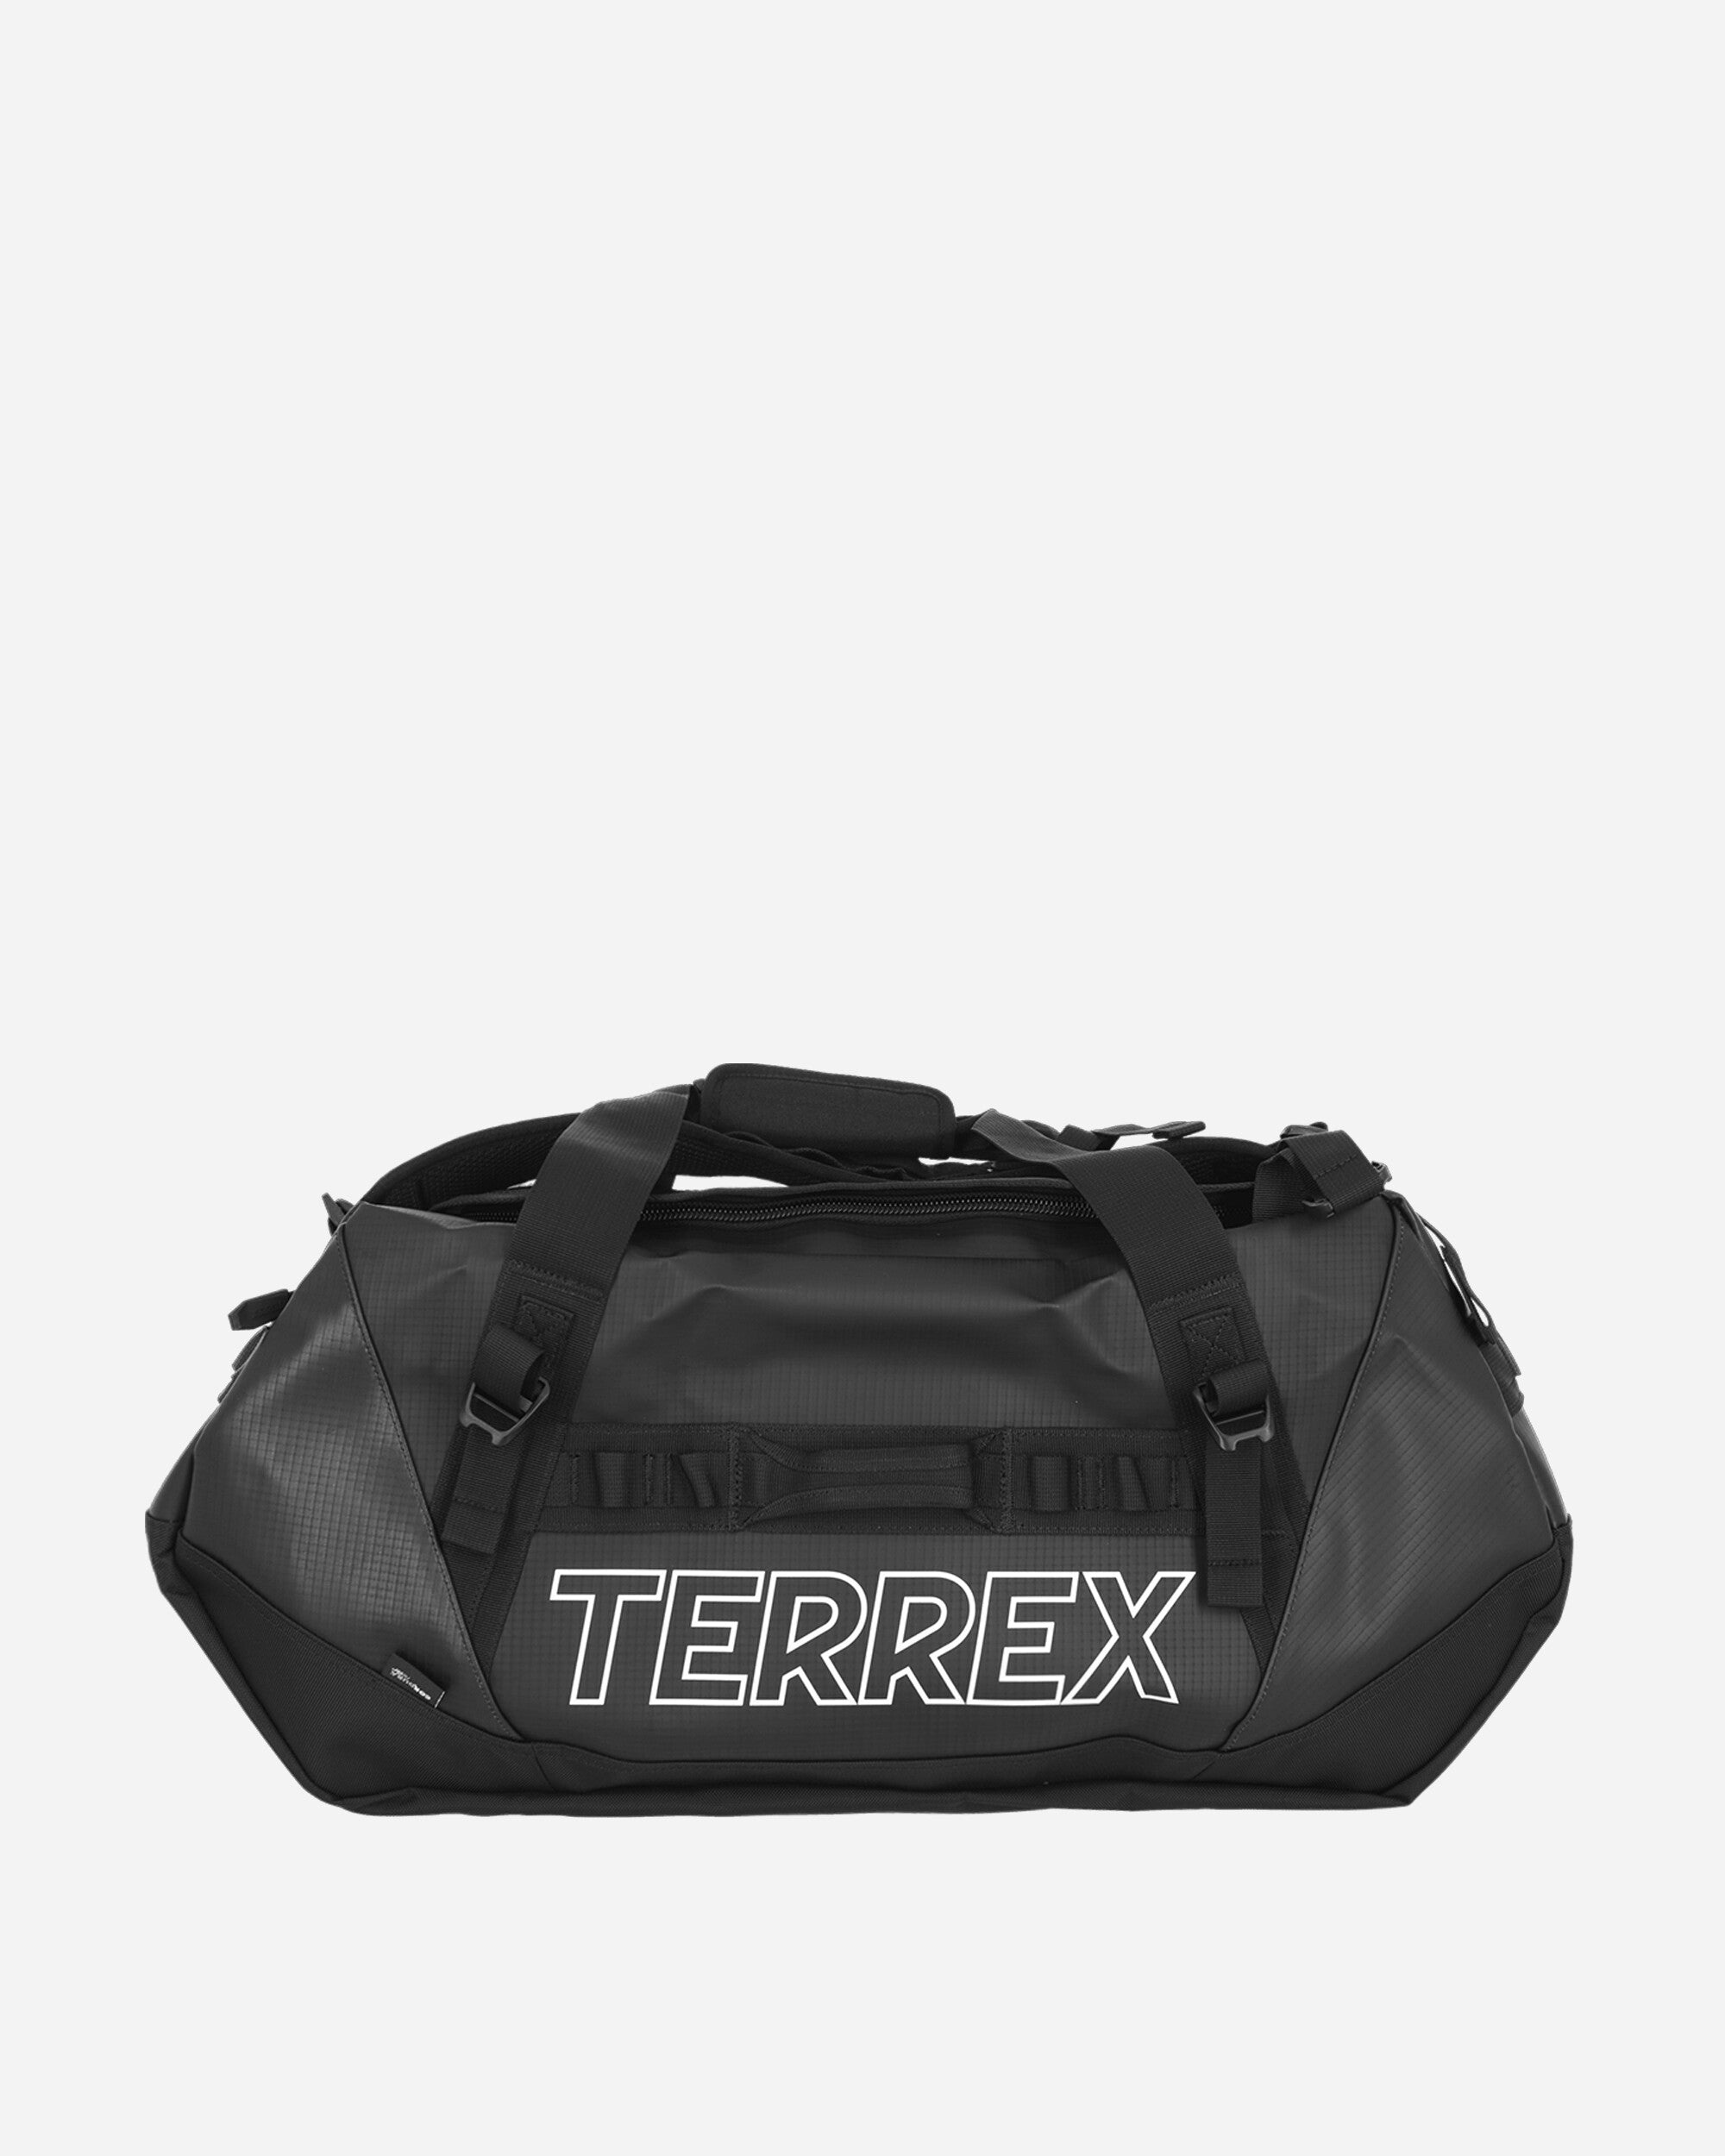 TERREX Expedition Duffel Bag Medium Black - 1